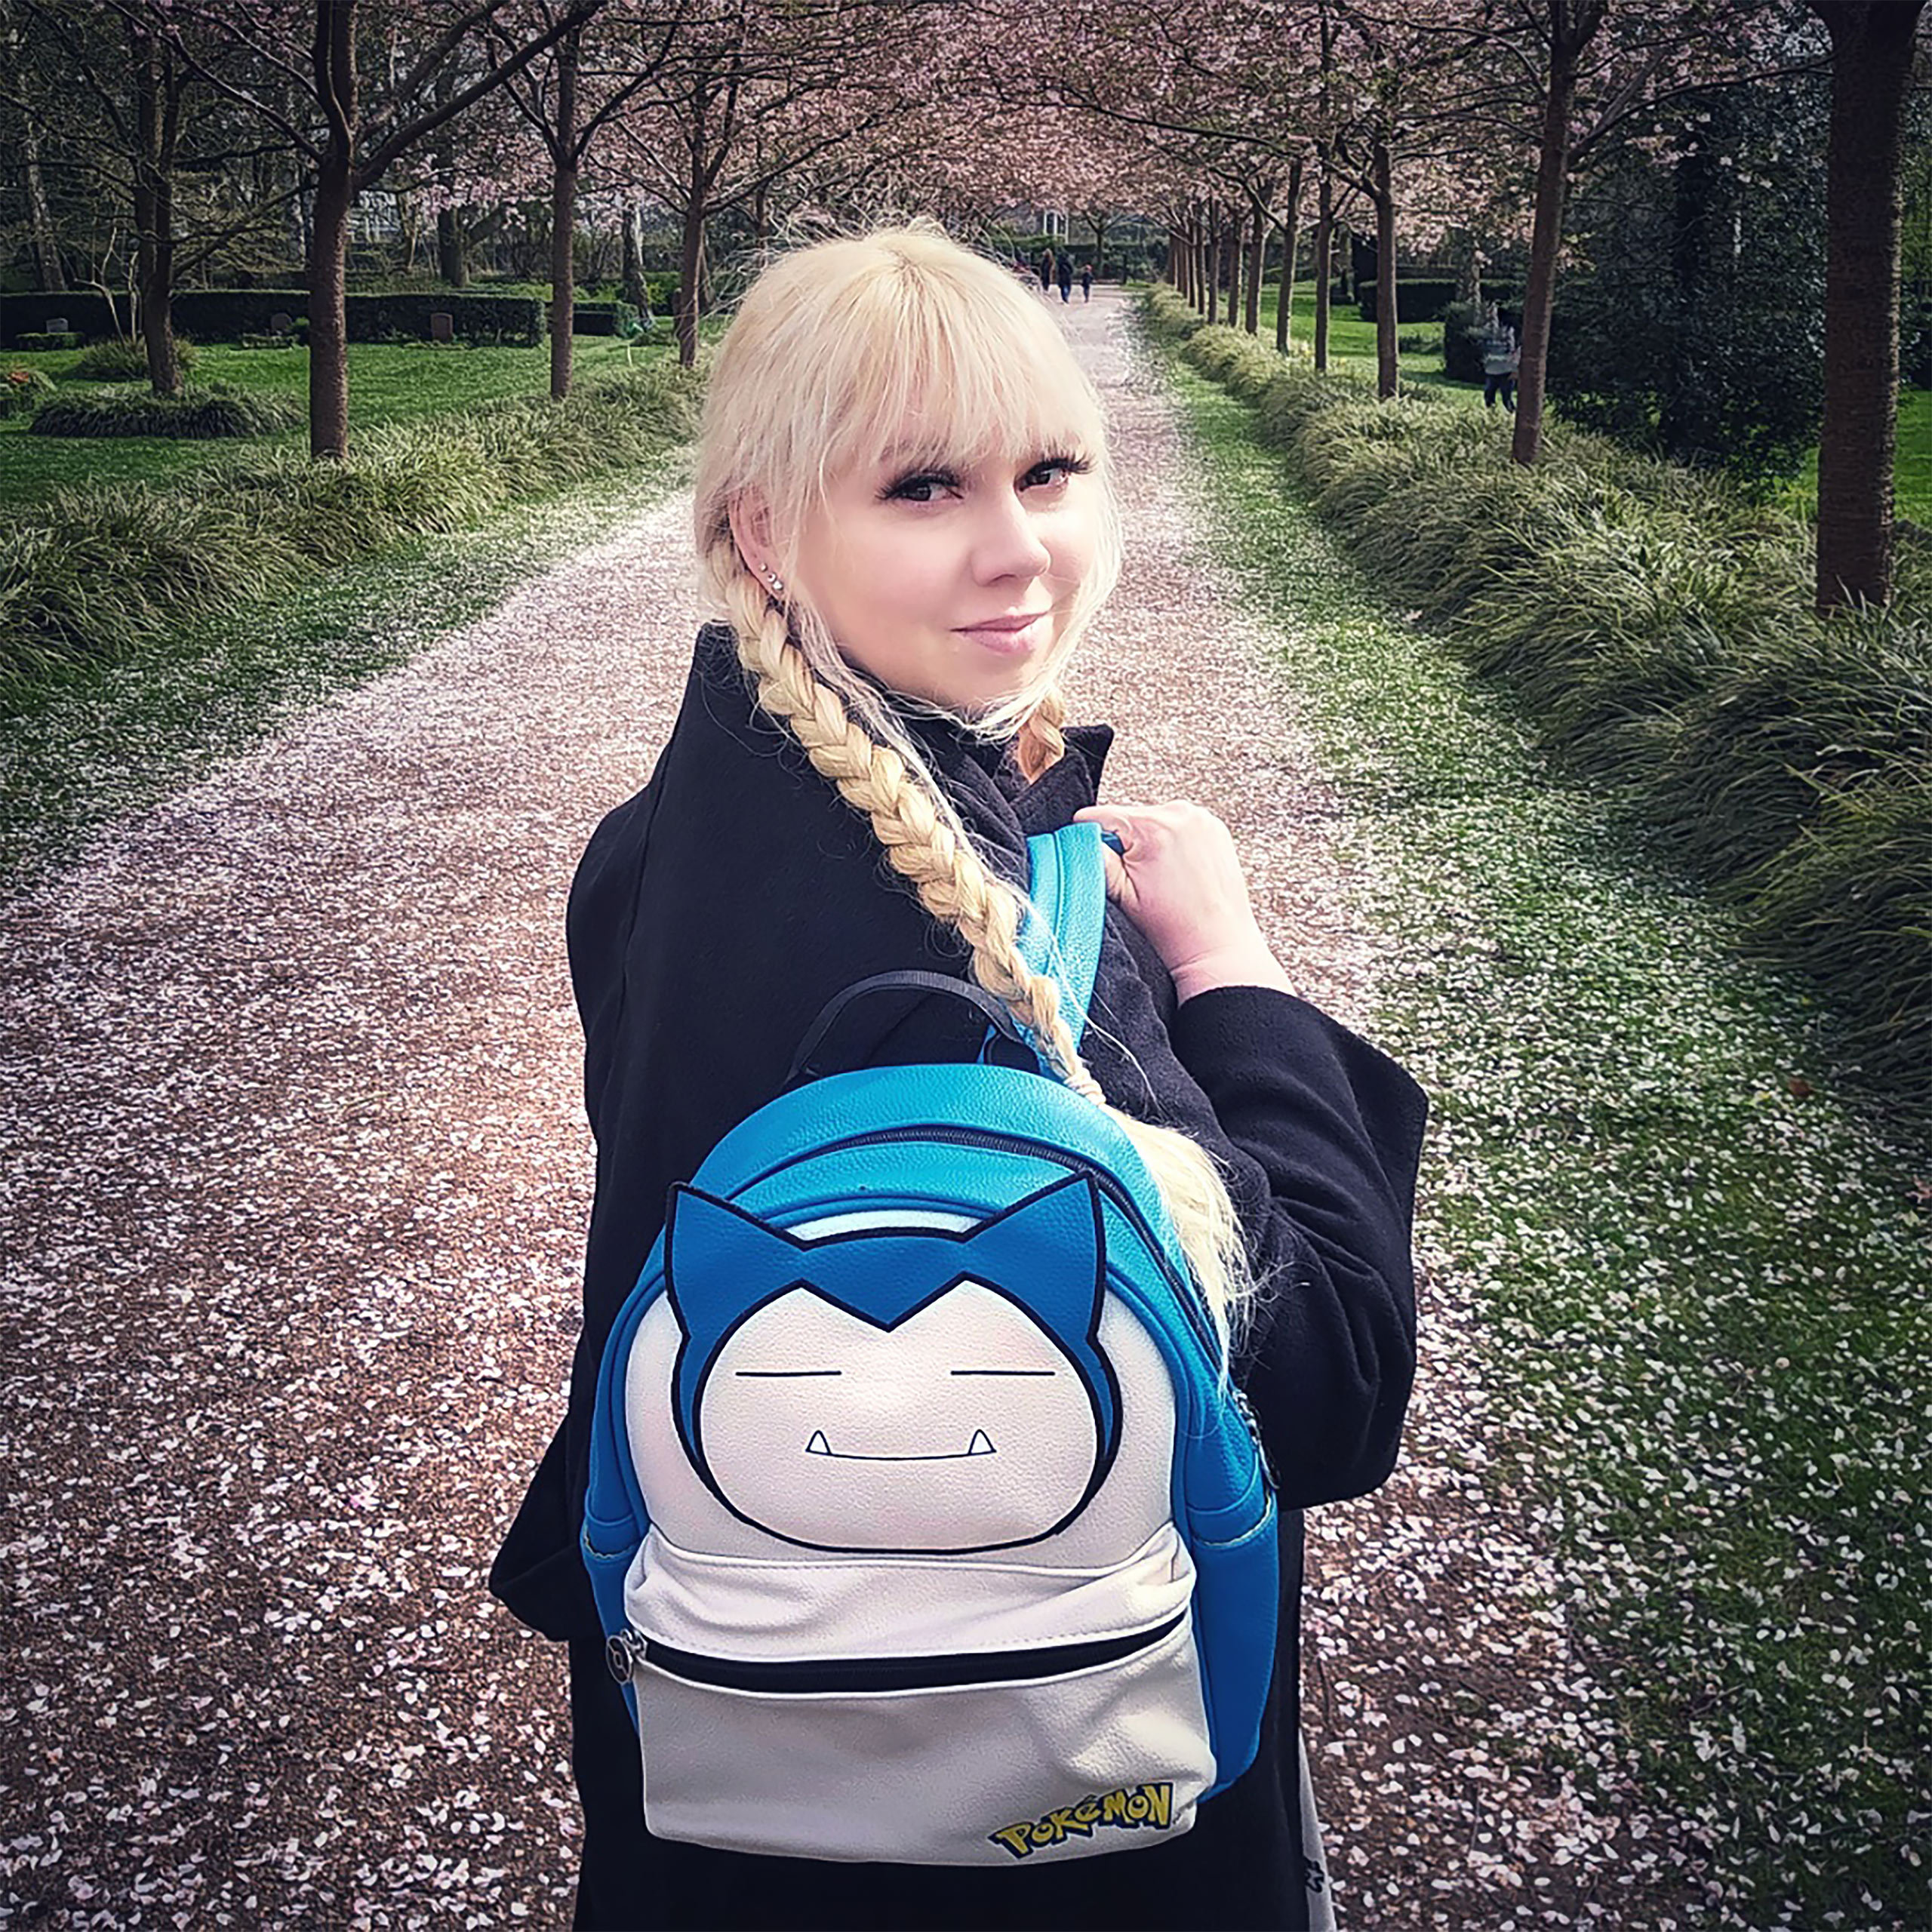 Pokemon - Snorlax Mini Backpack